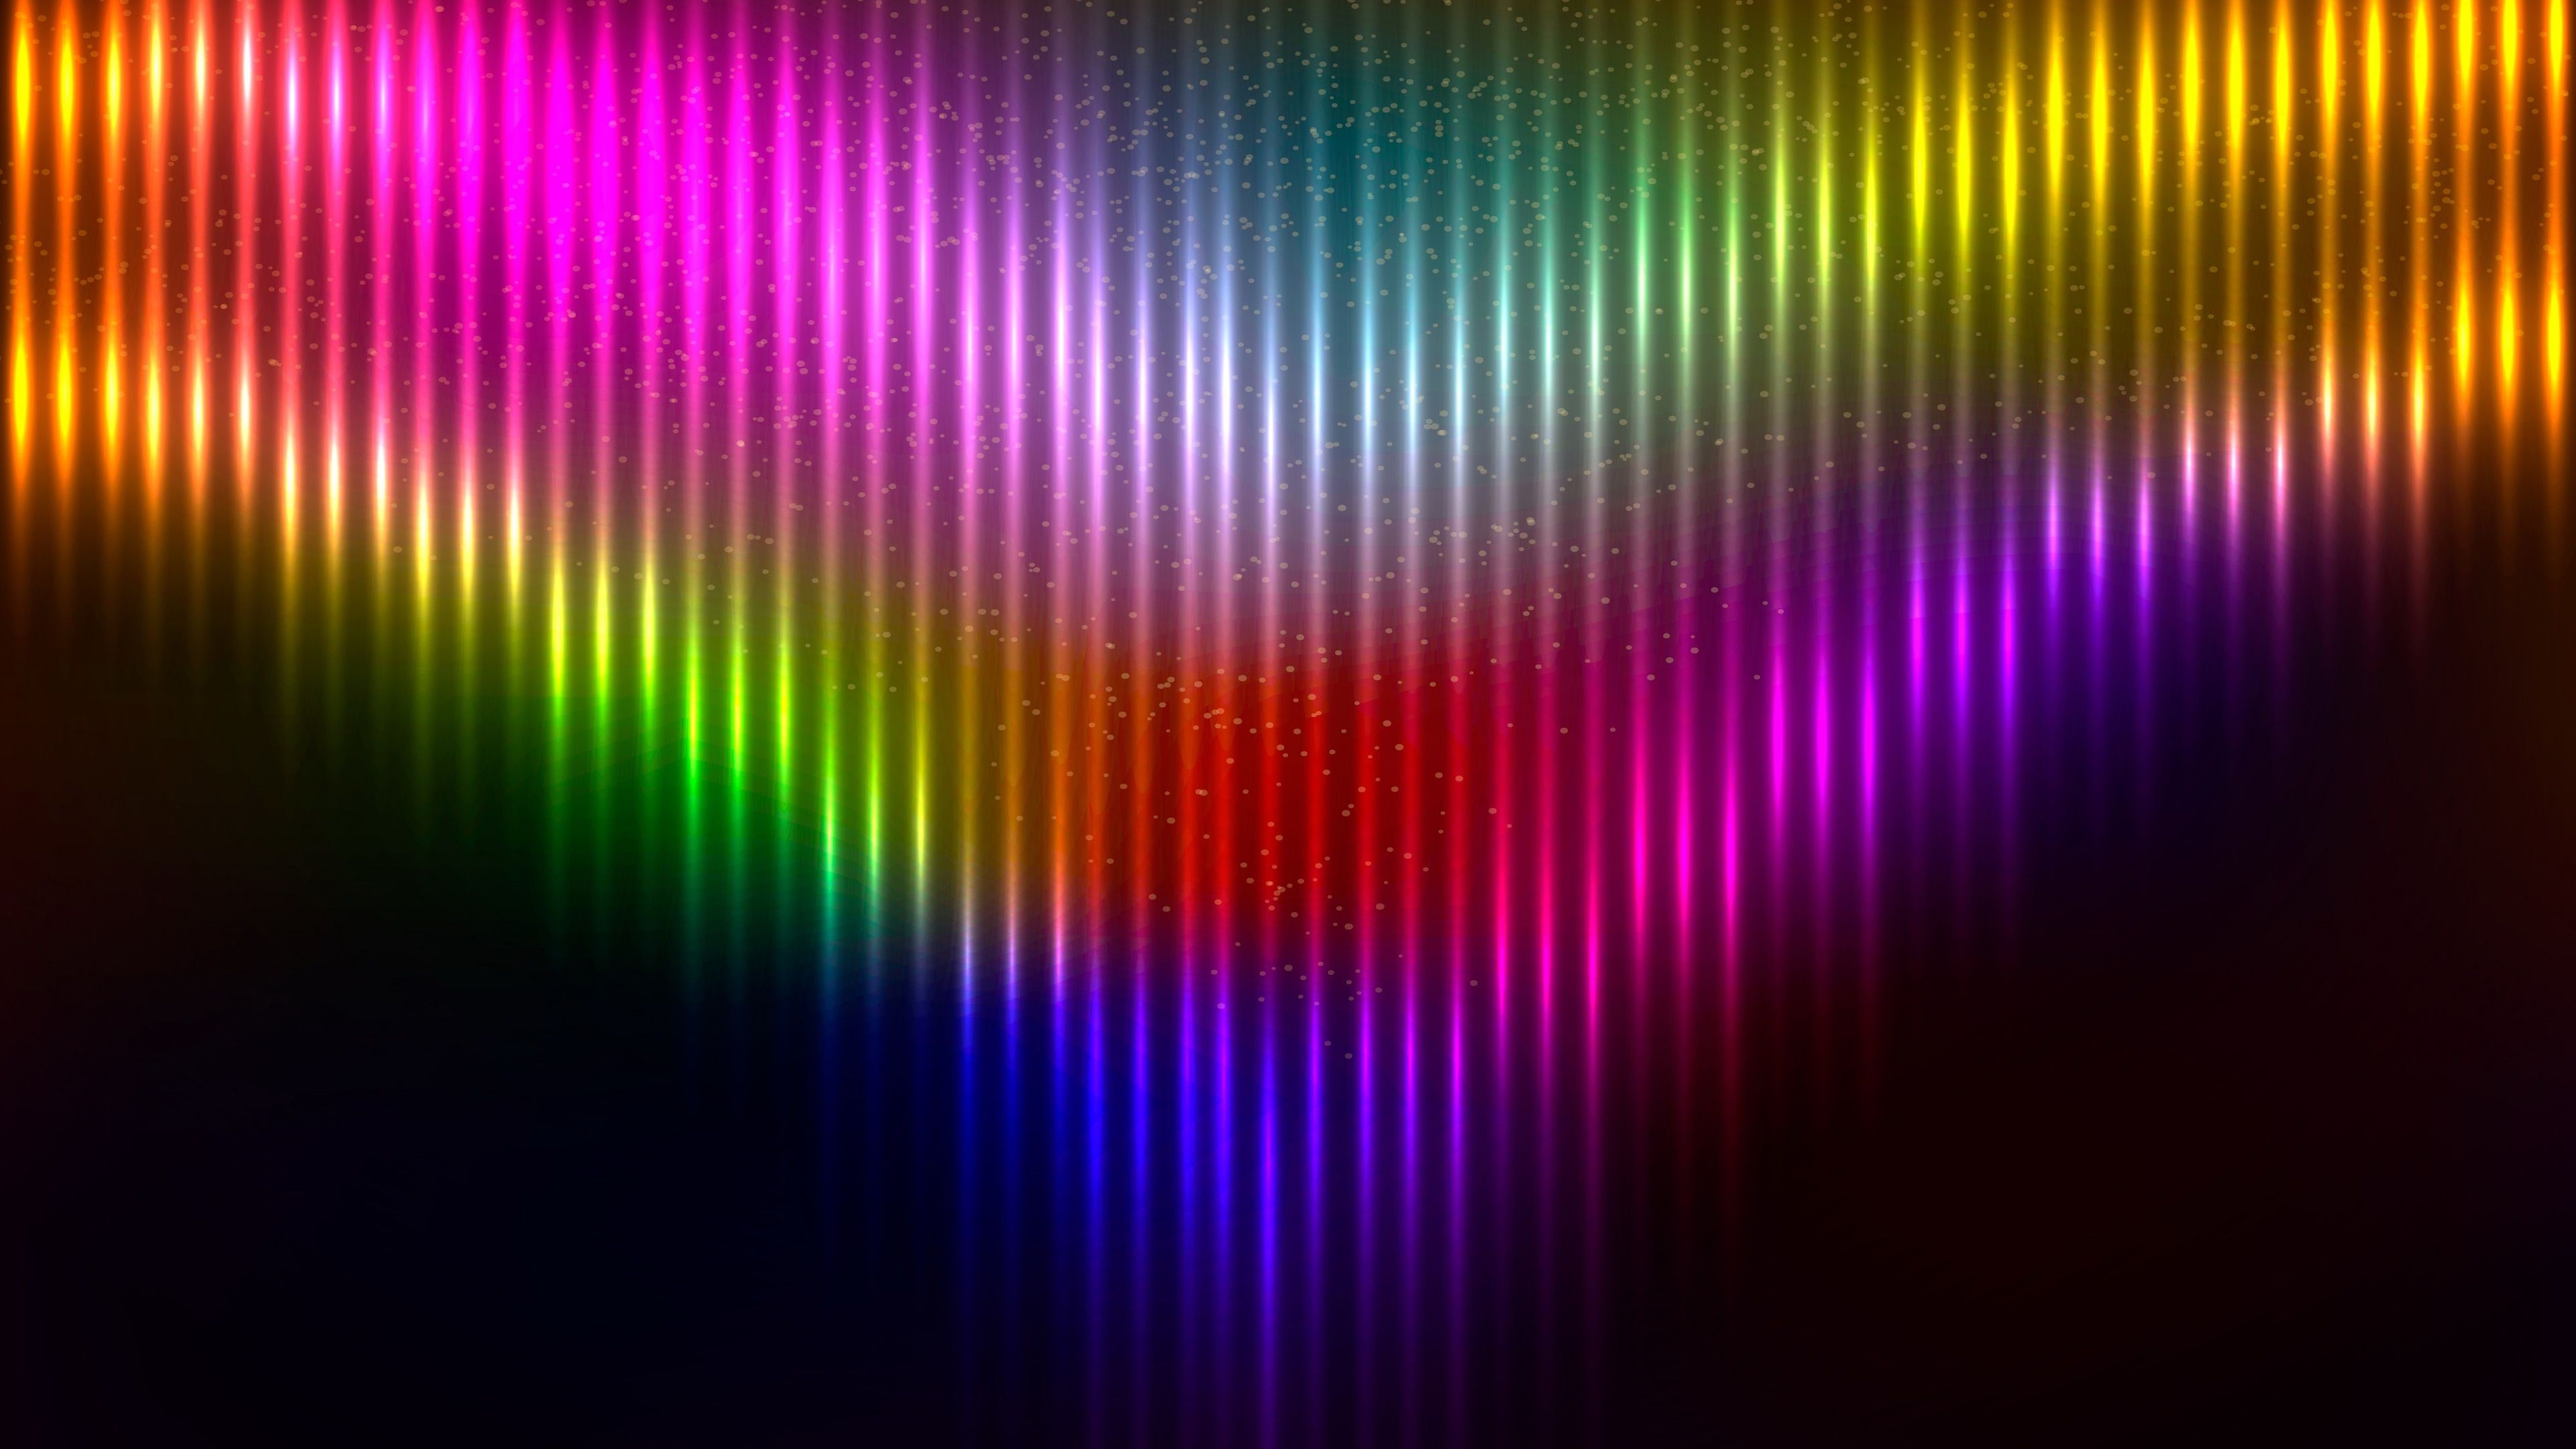 Wallpaper 4k Artistic Colors Rainbow Background 4k 4k Wallpaper, Abstract Wallpaper, Artistic Wallpaper, Background Wallpaper, Colors Wallpaper, Hd Wallpaper, Rainbow Wallpaper